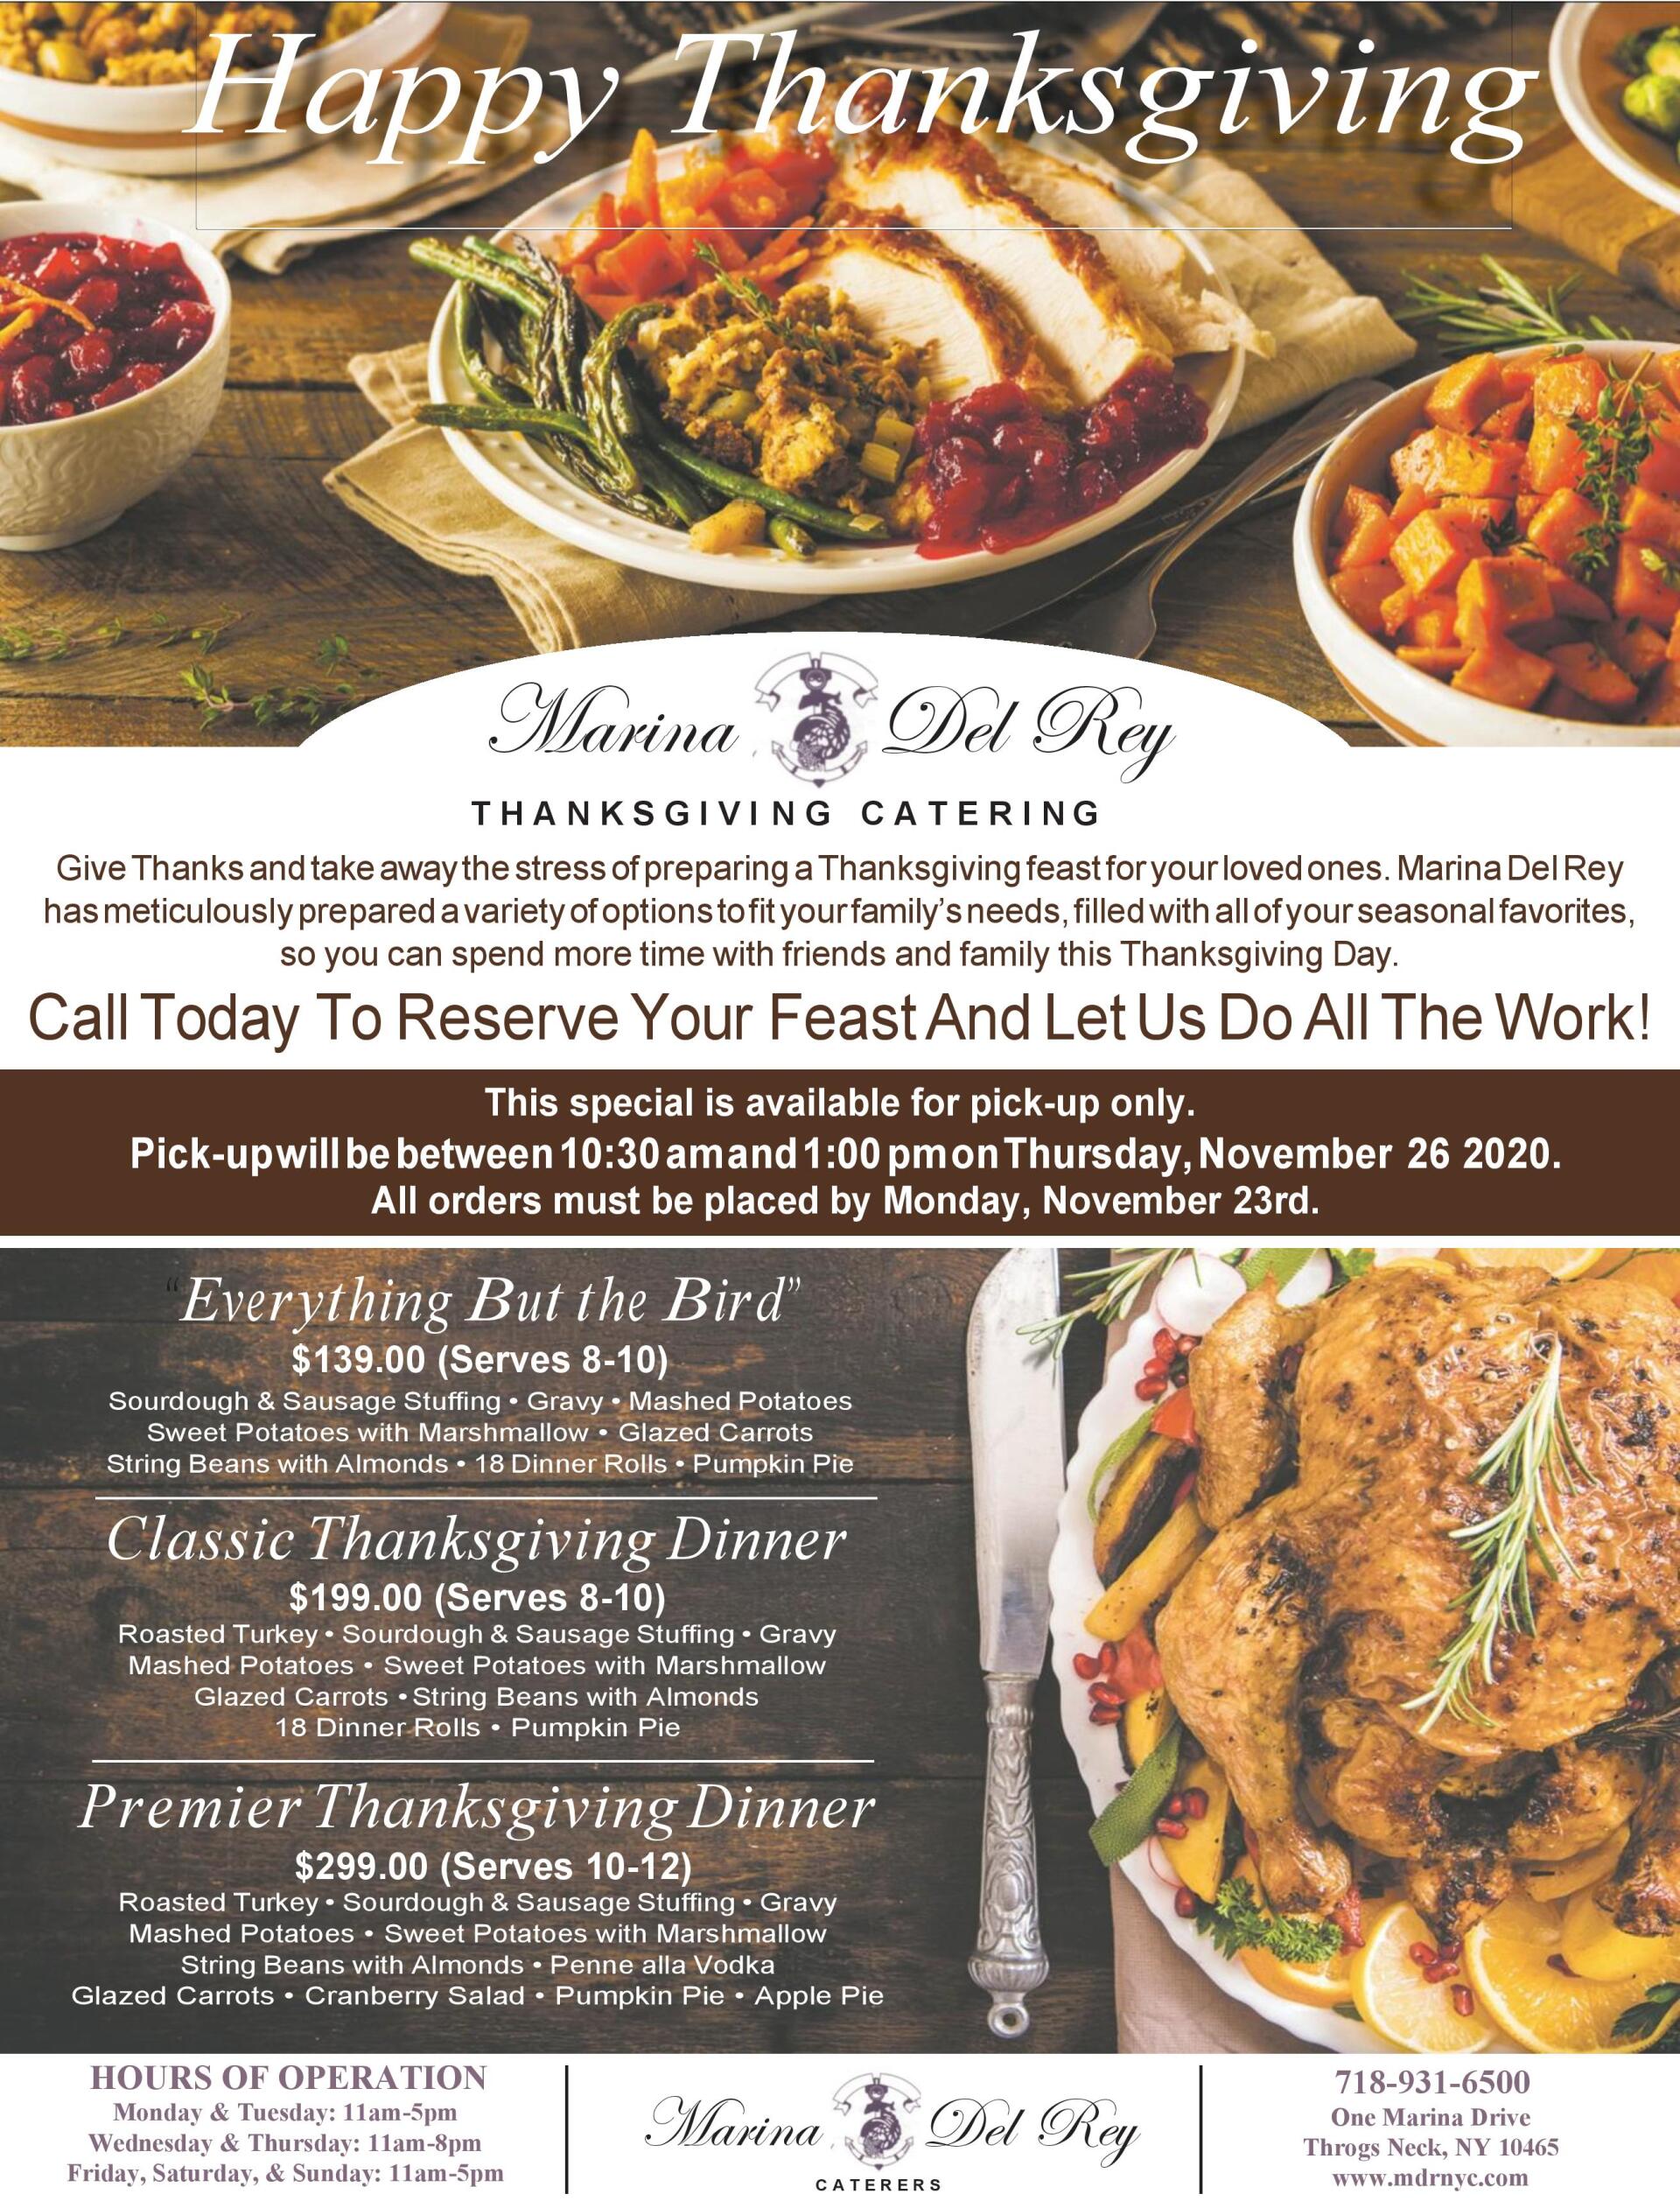 Thanksgiving Catering at Marina Del Rey